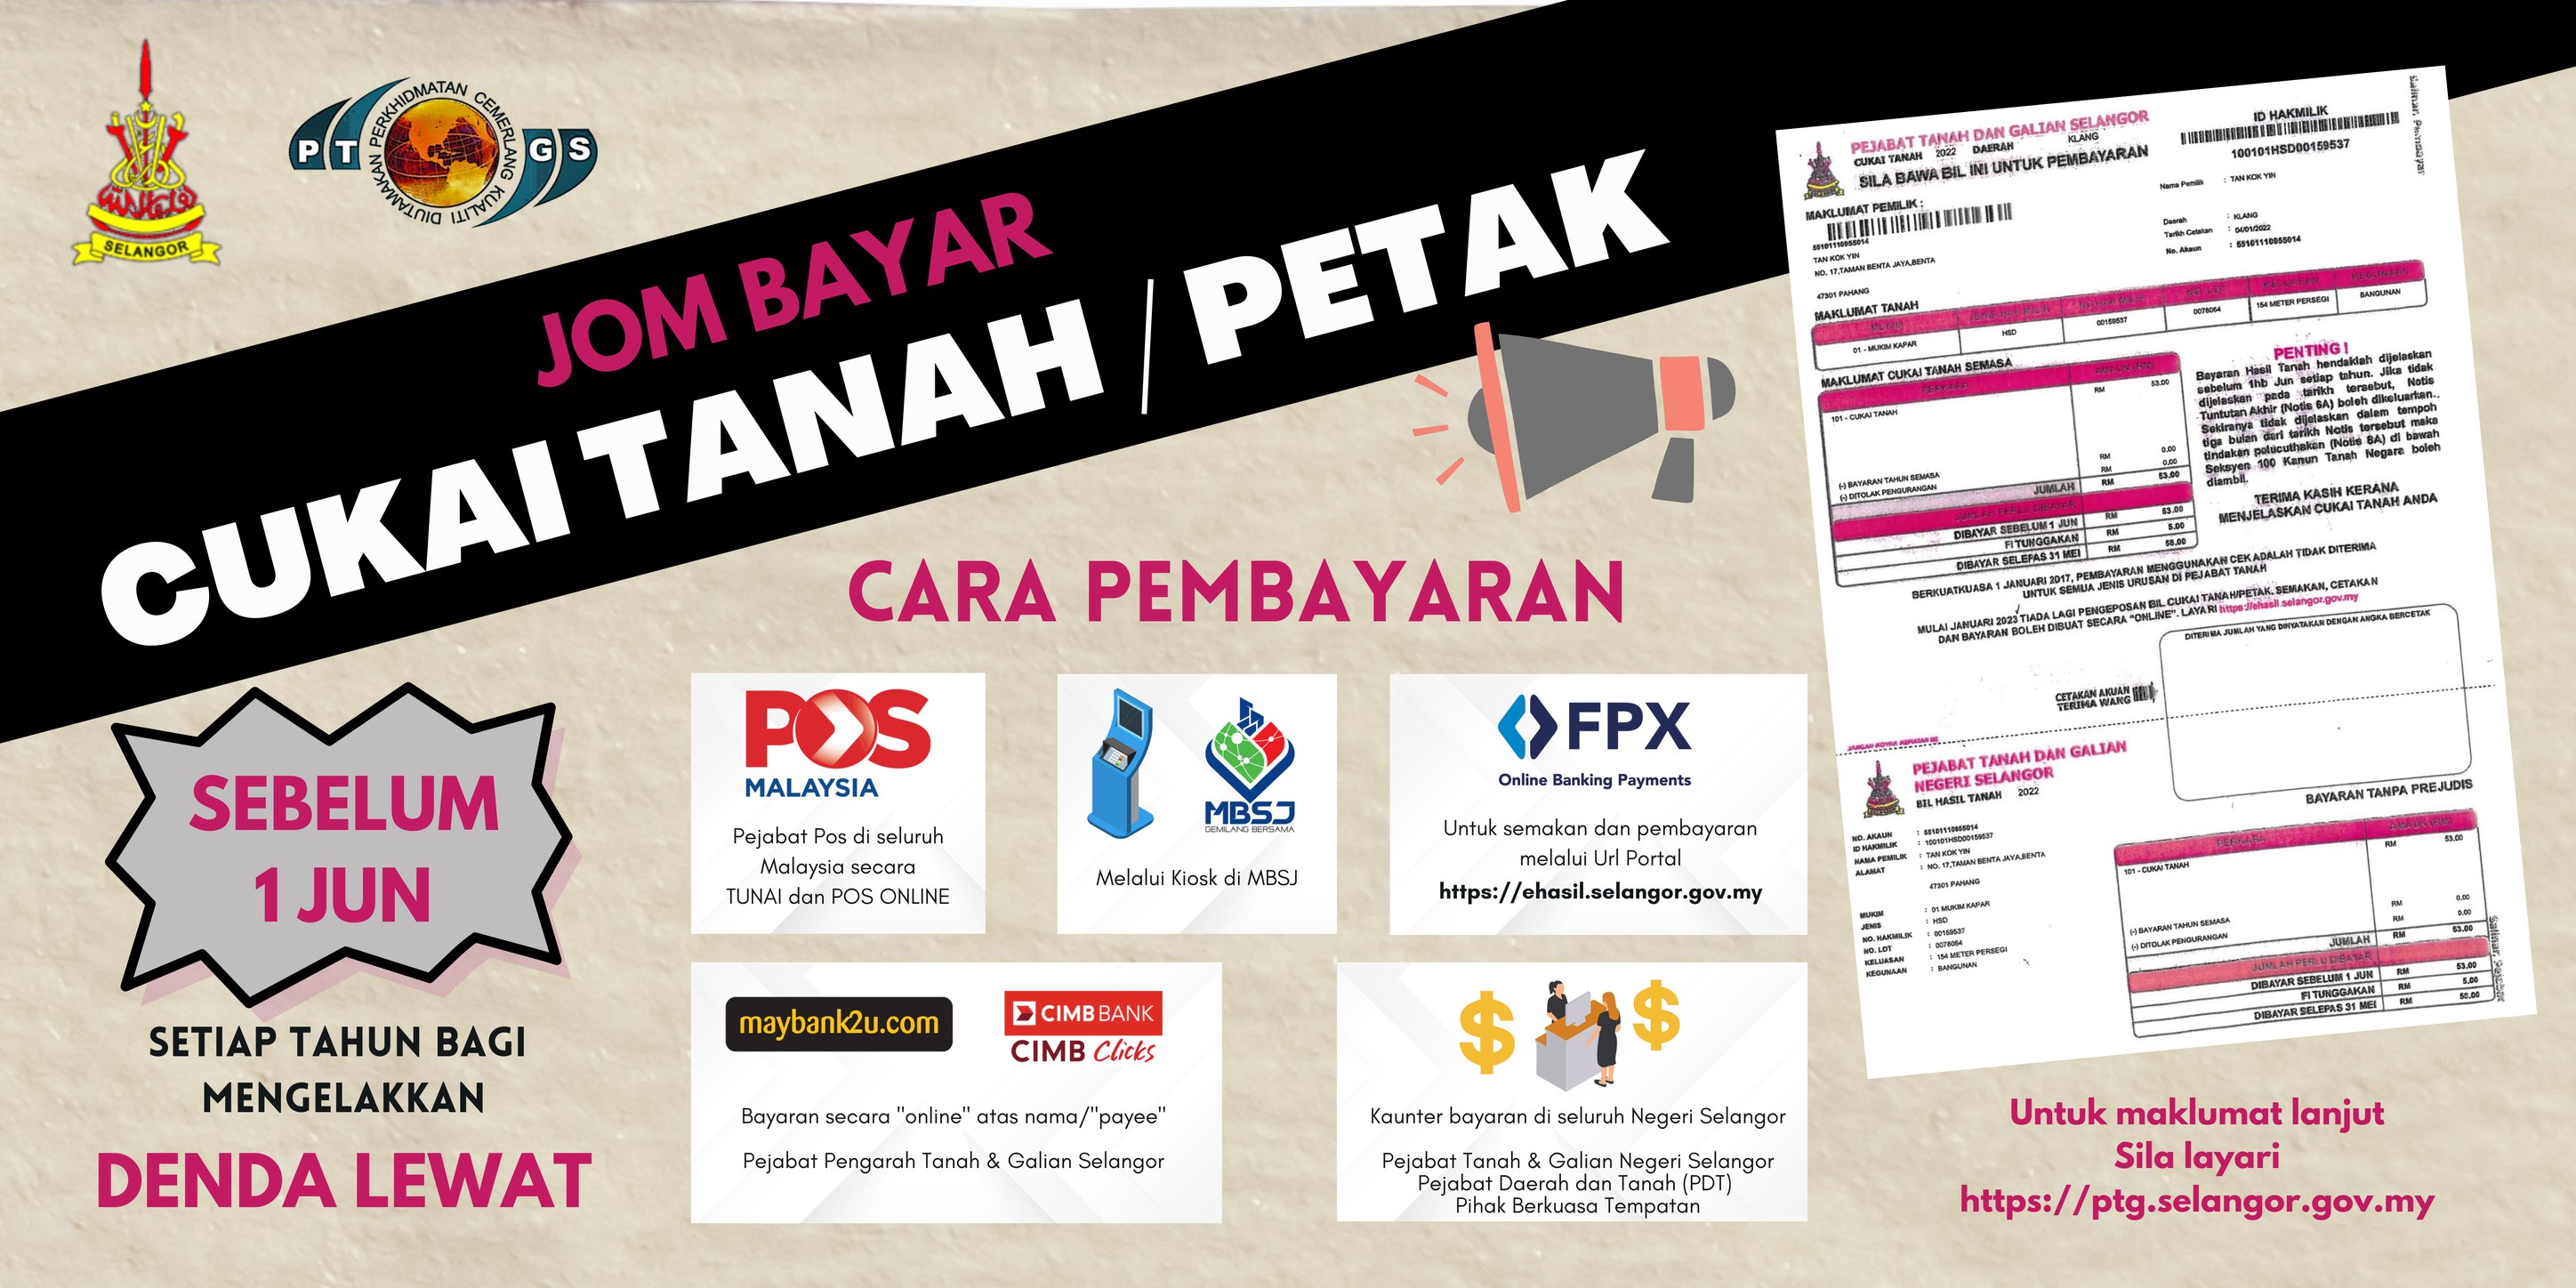 Pembayaran Online Lebih Pantas Untuk Cukai Tanah dan Petak Negeri Selangor sebelum 31 Mei setiap tahun